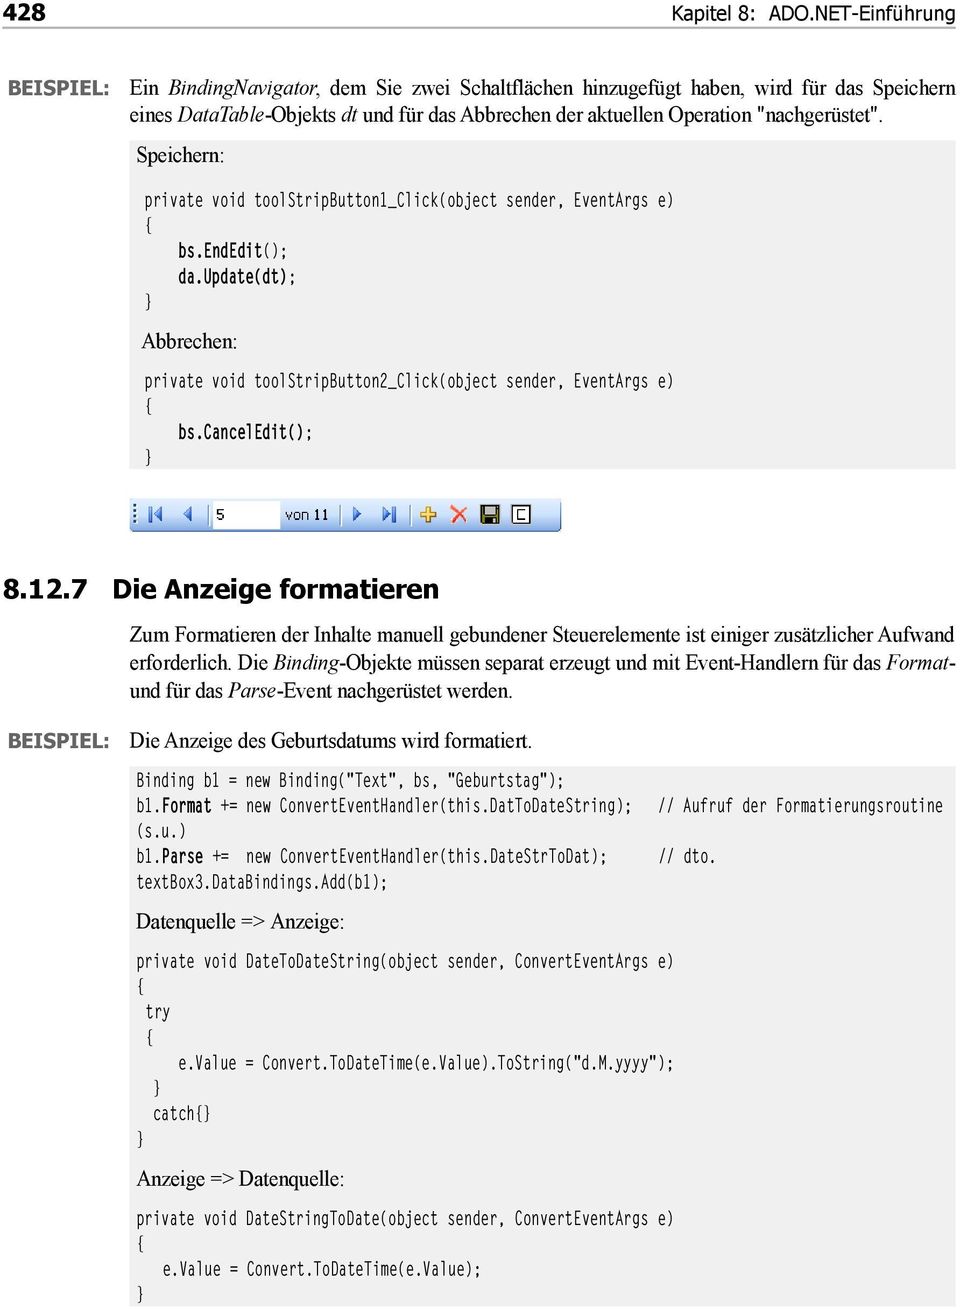 Speichern: private void toolstripbutton1_click(object sender, EventArgs e) bs.endedit(); da.update(dt); Abbrechen: private void toolstripbutton2_click(object sender, EventArgs e) bs.canceledit(); 8.